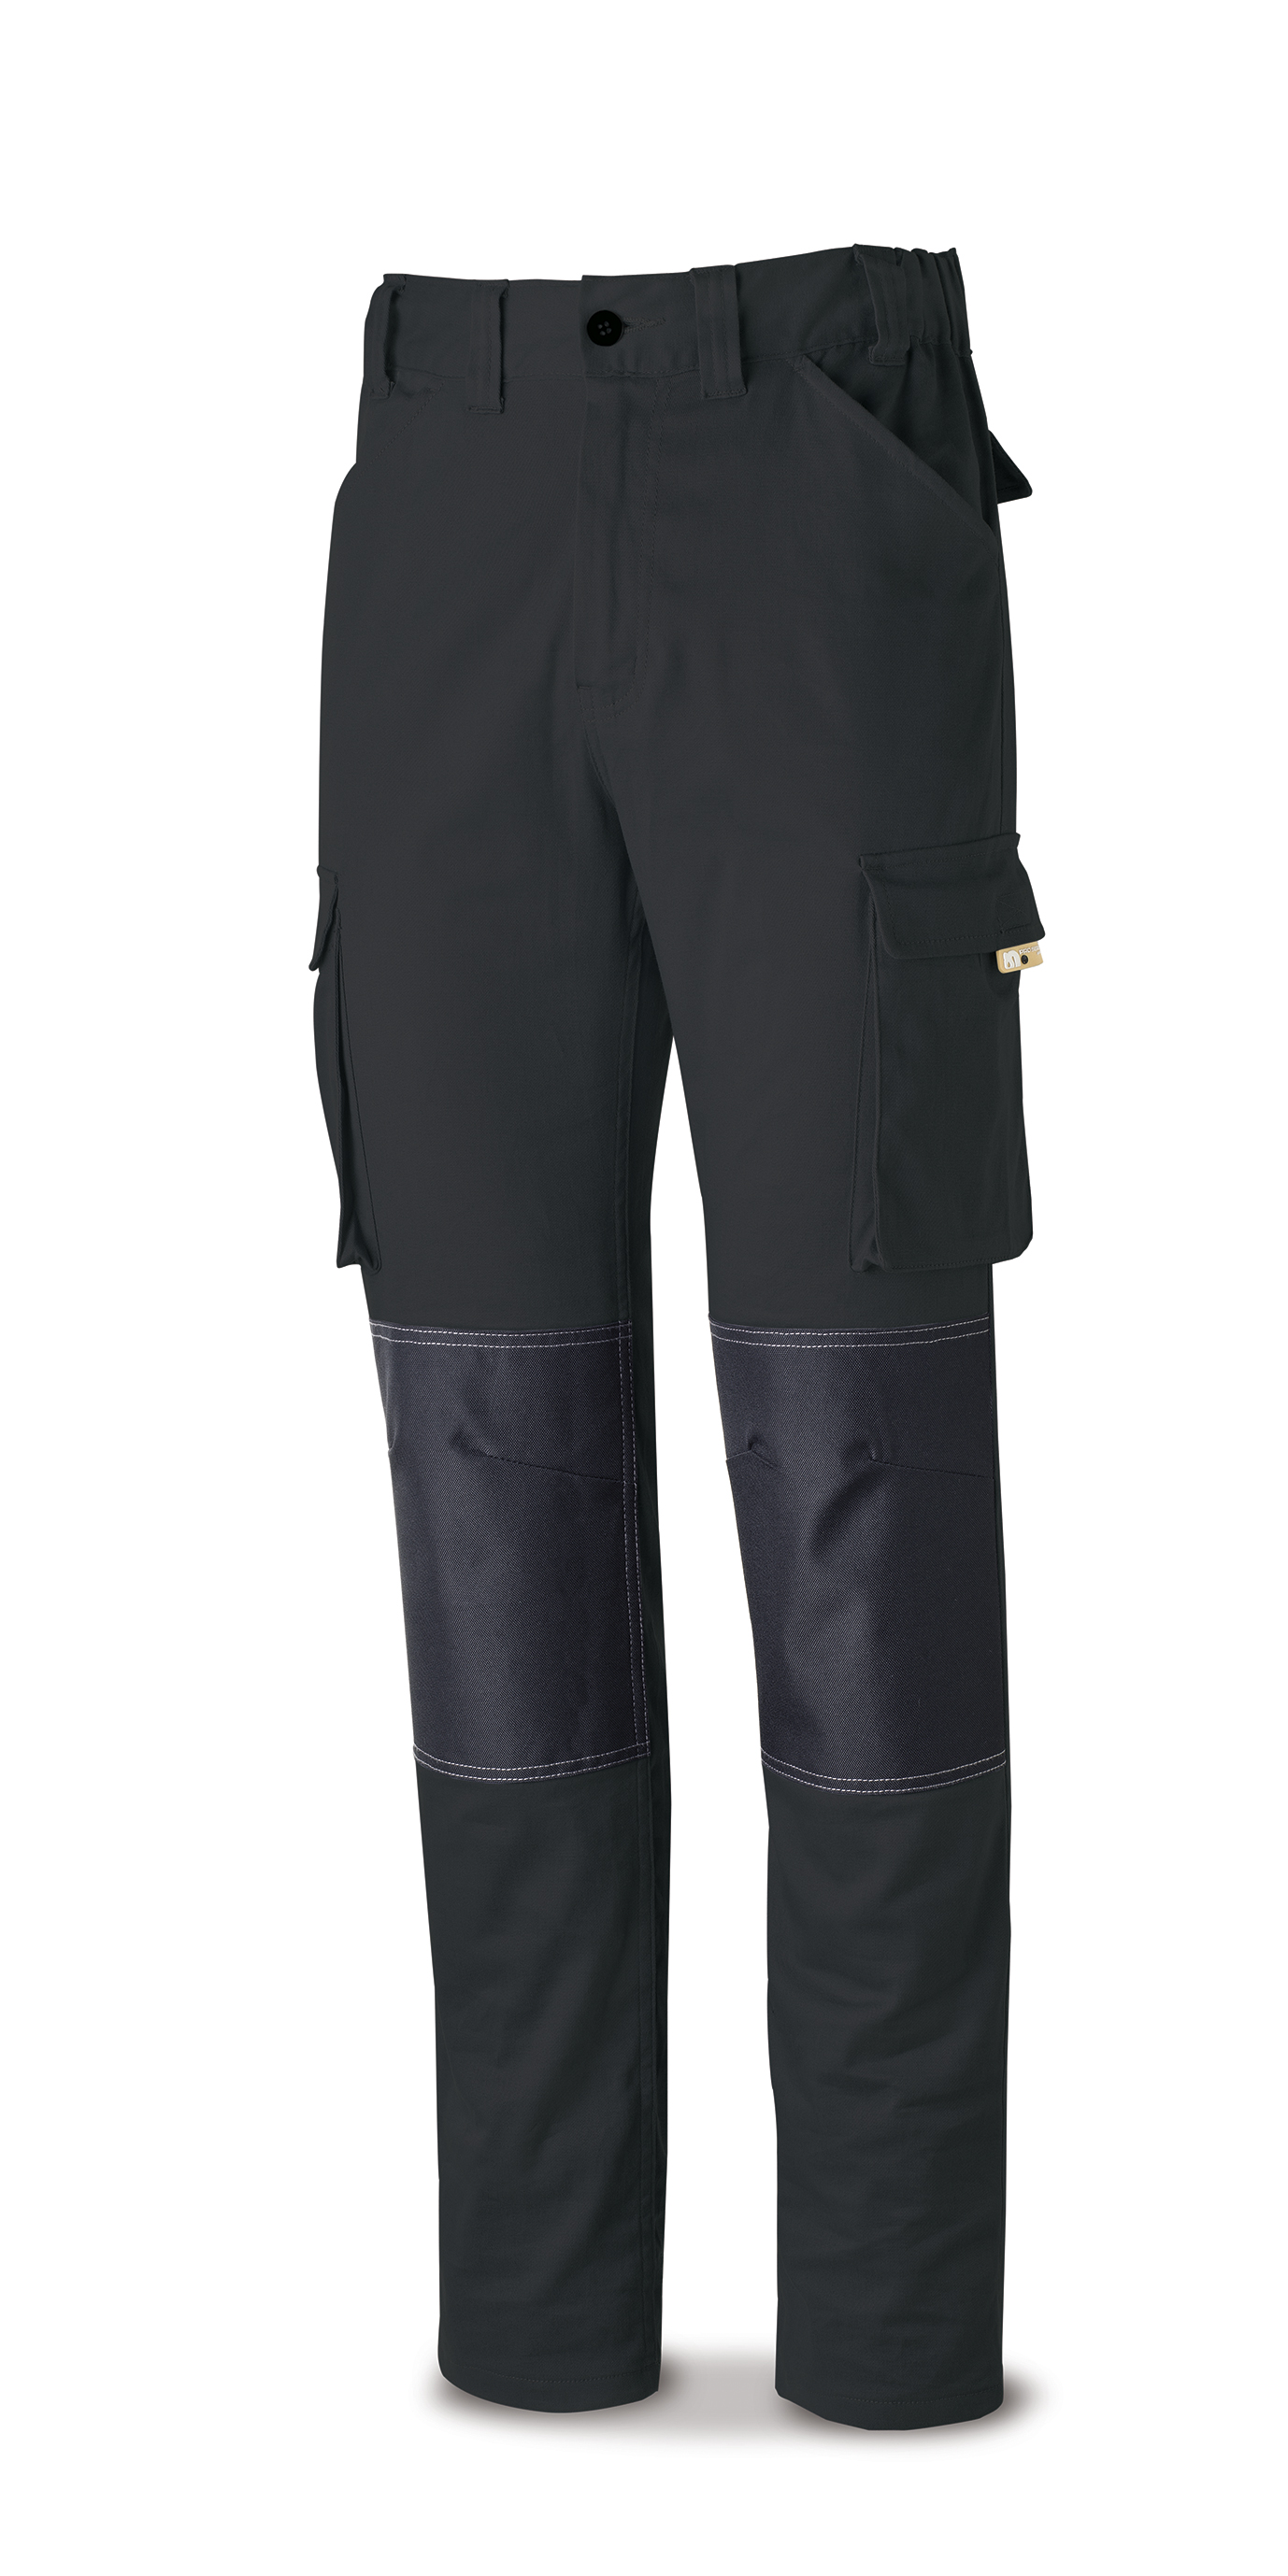 588-PSTRN Workwear Pro Series ELASTIC cotton and elastene pants. Grey.